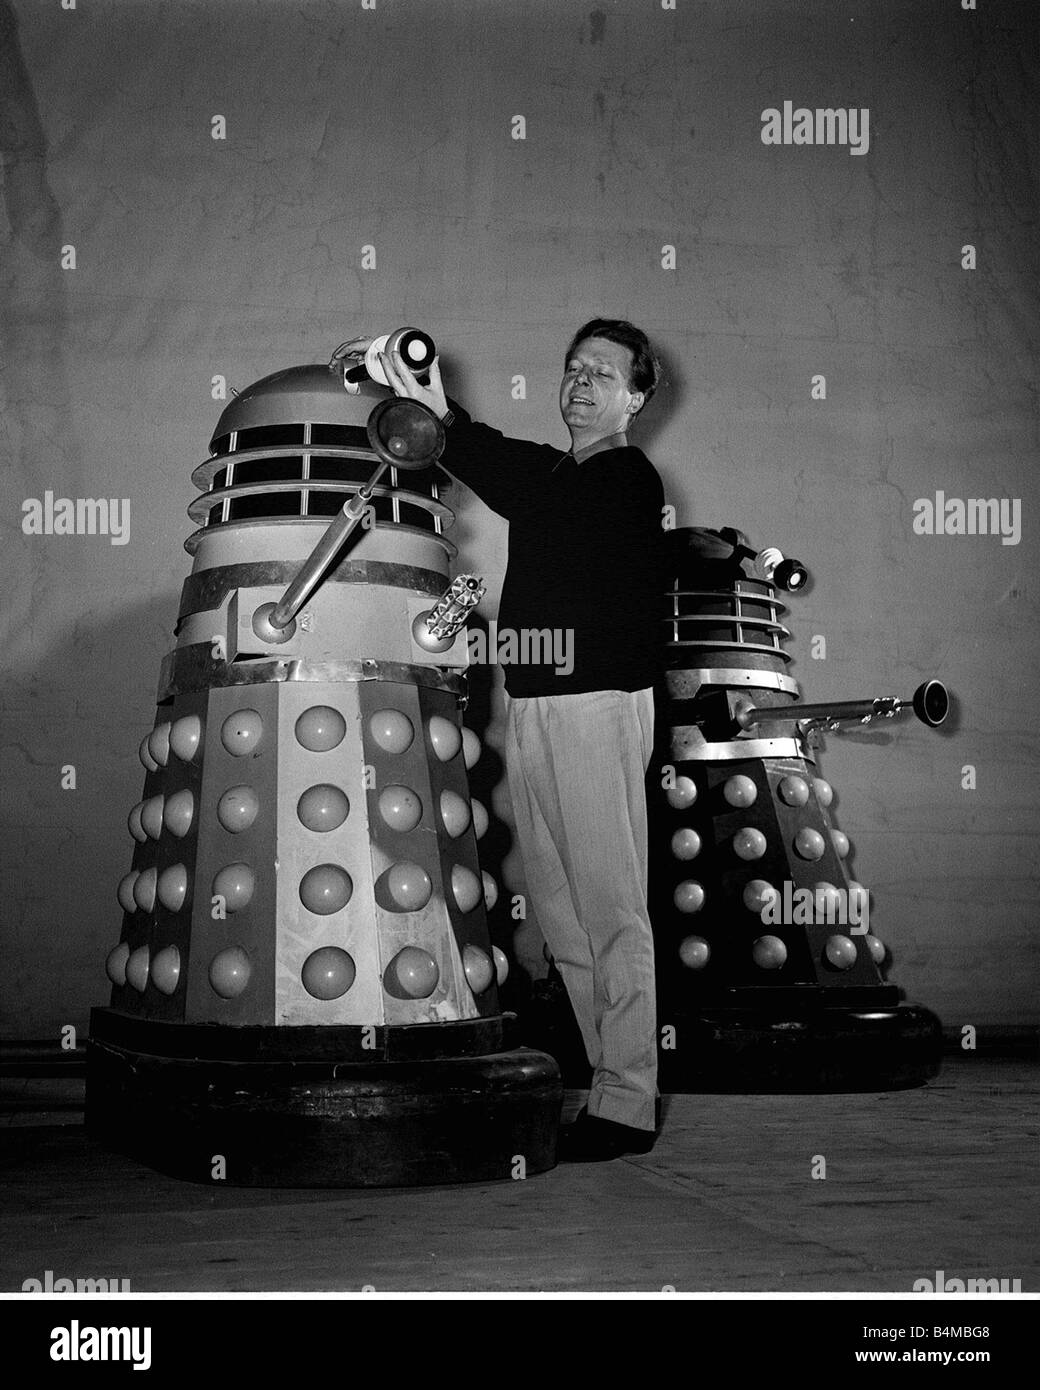 Raymond Cusick mit Daleks Dezember 1964 TV Programm Doctor Who Roboter Science-Fiction der 1960er Jahre Dr Who dalek Stockfoto